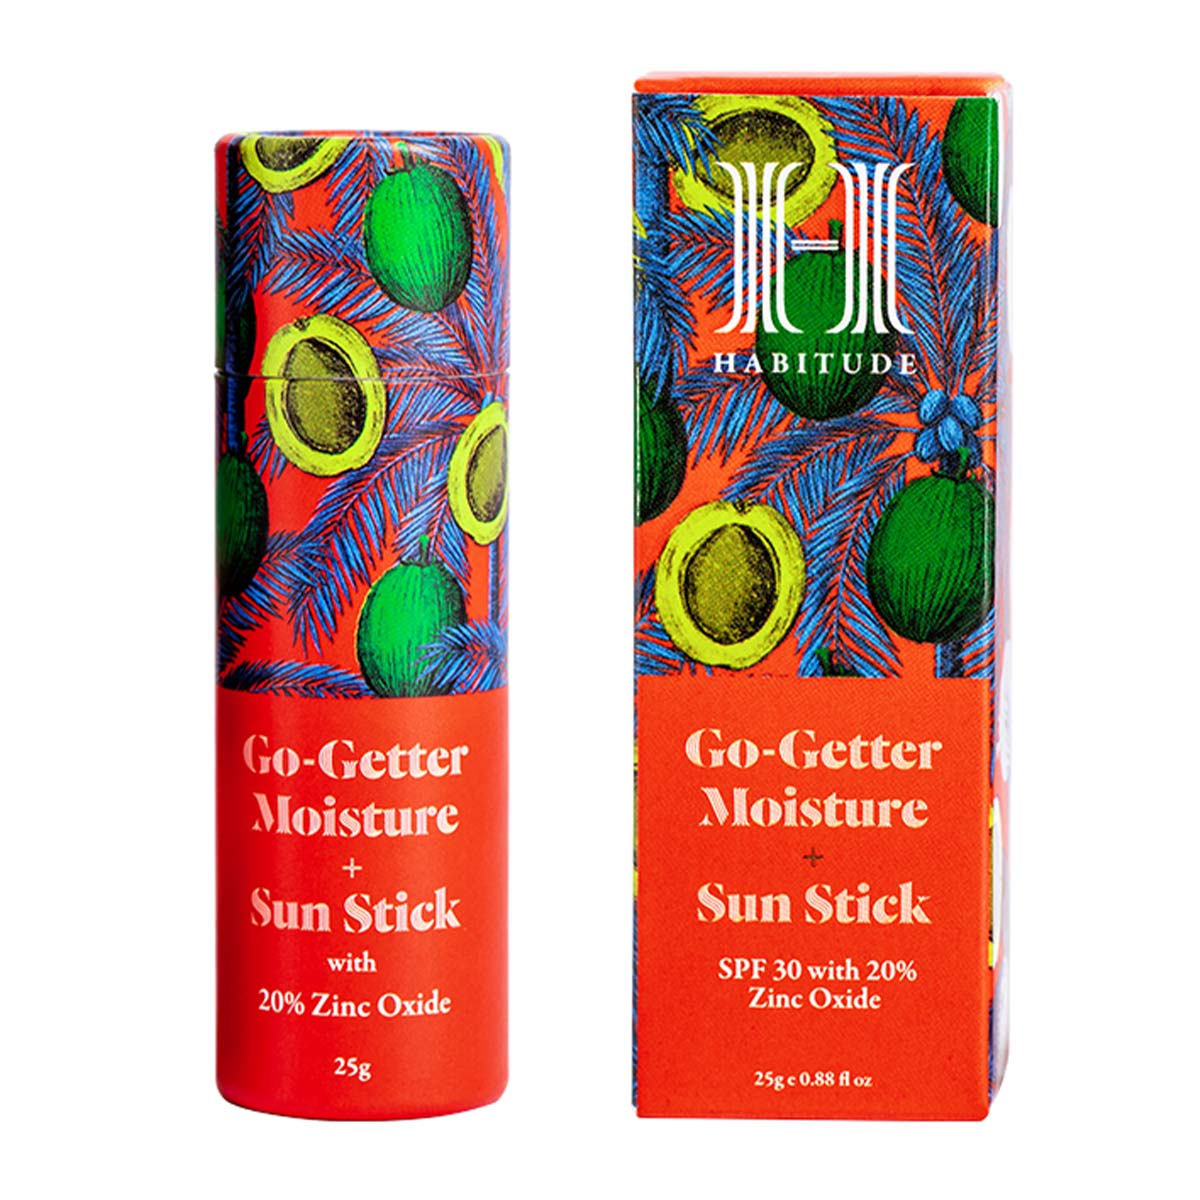 Habitude Go-Getter Moisture + Sun Stick